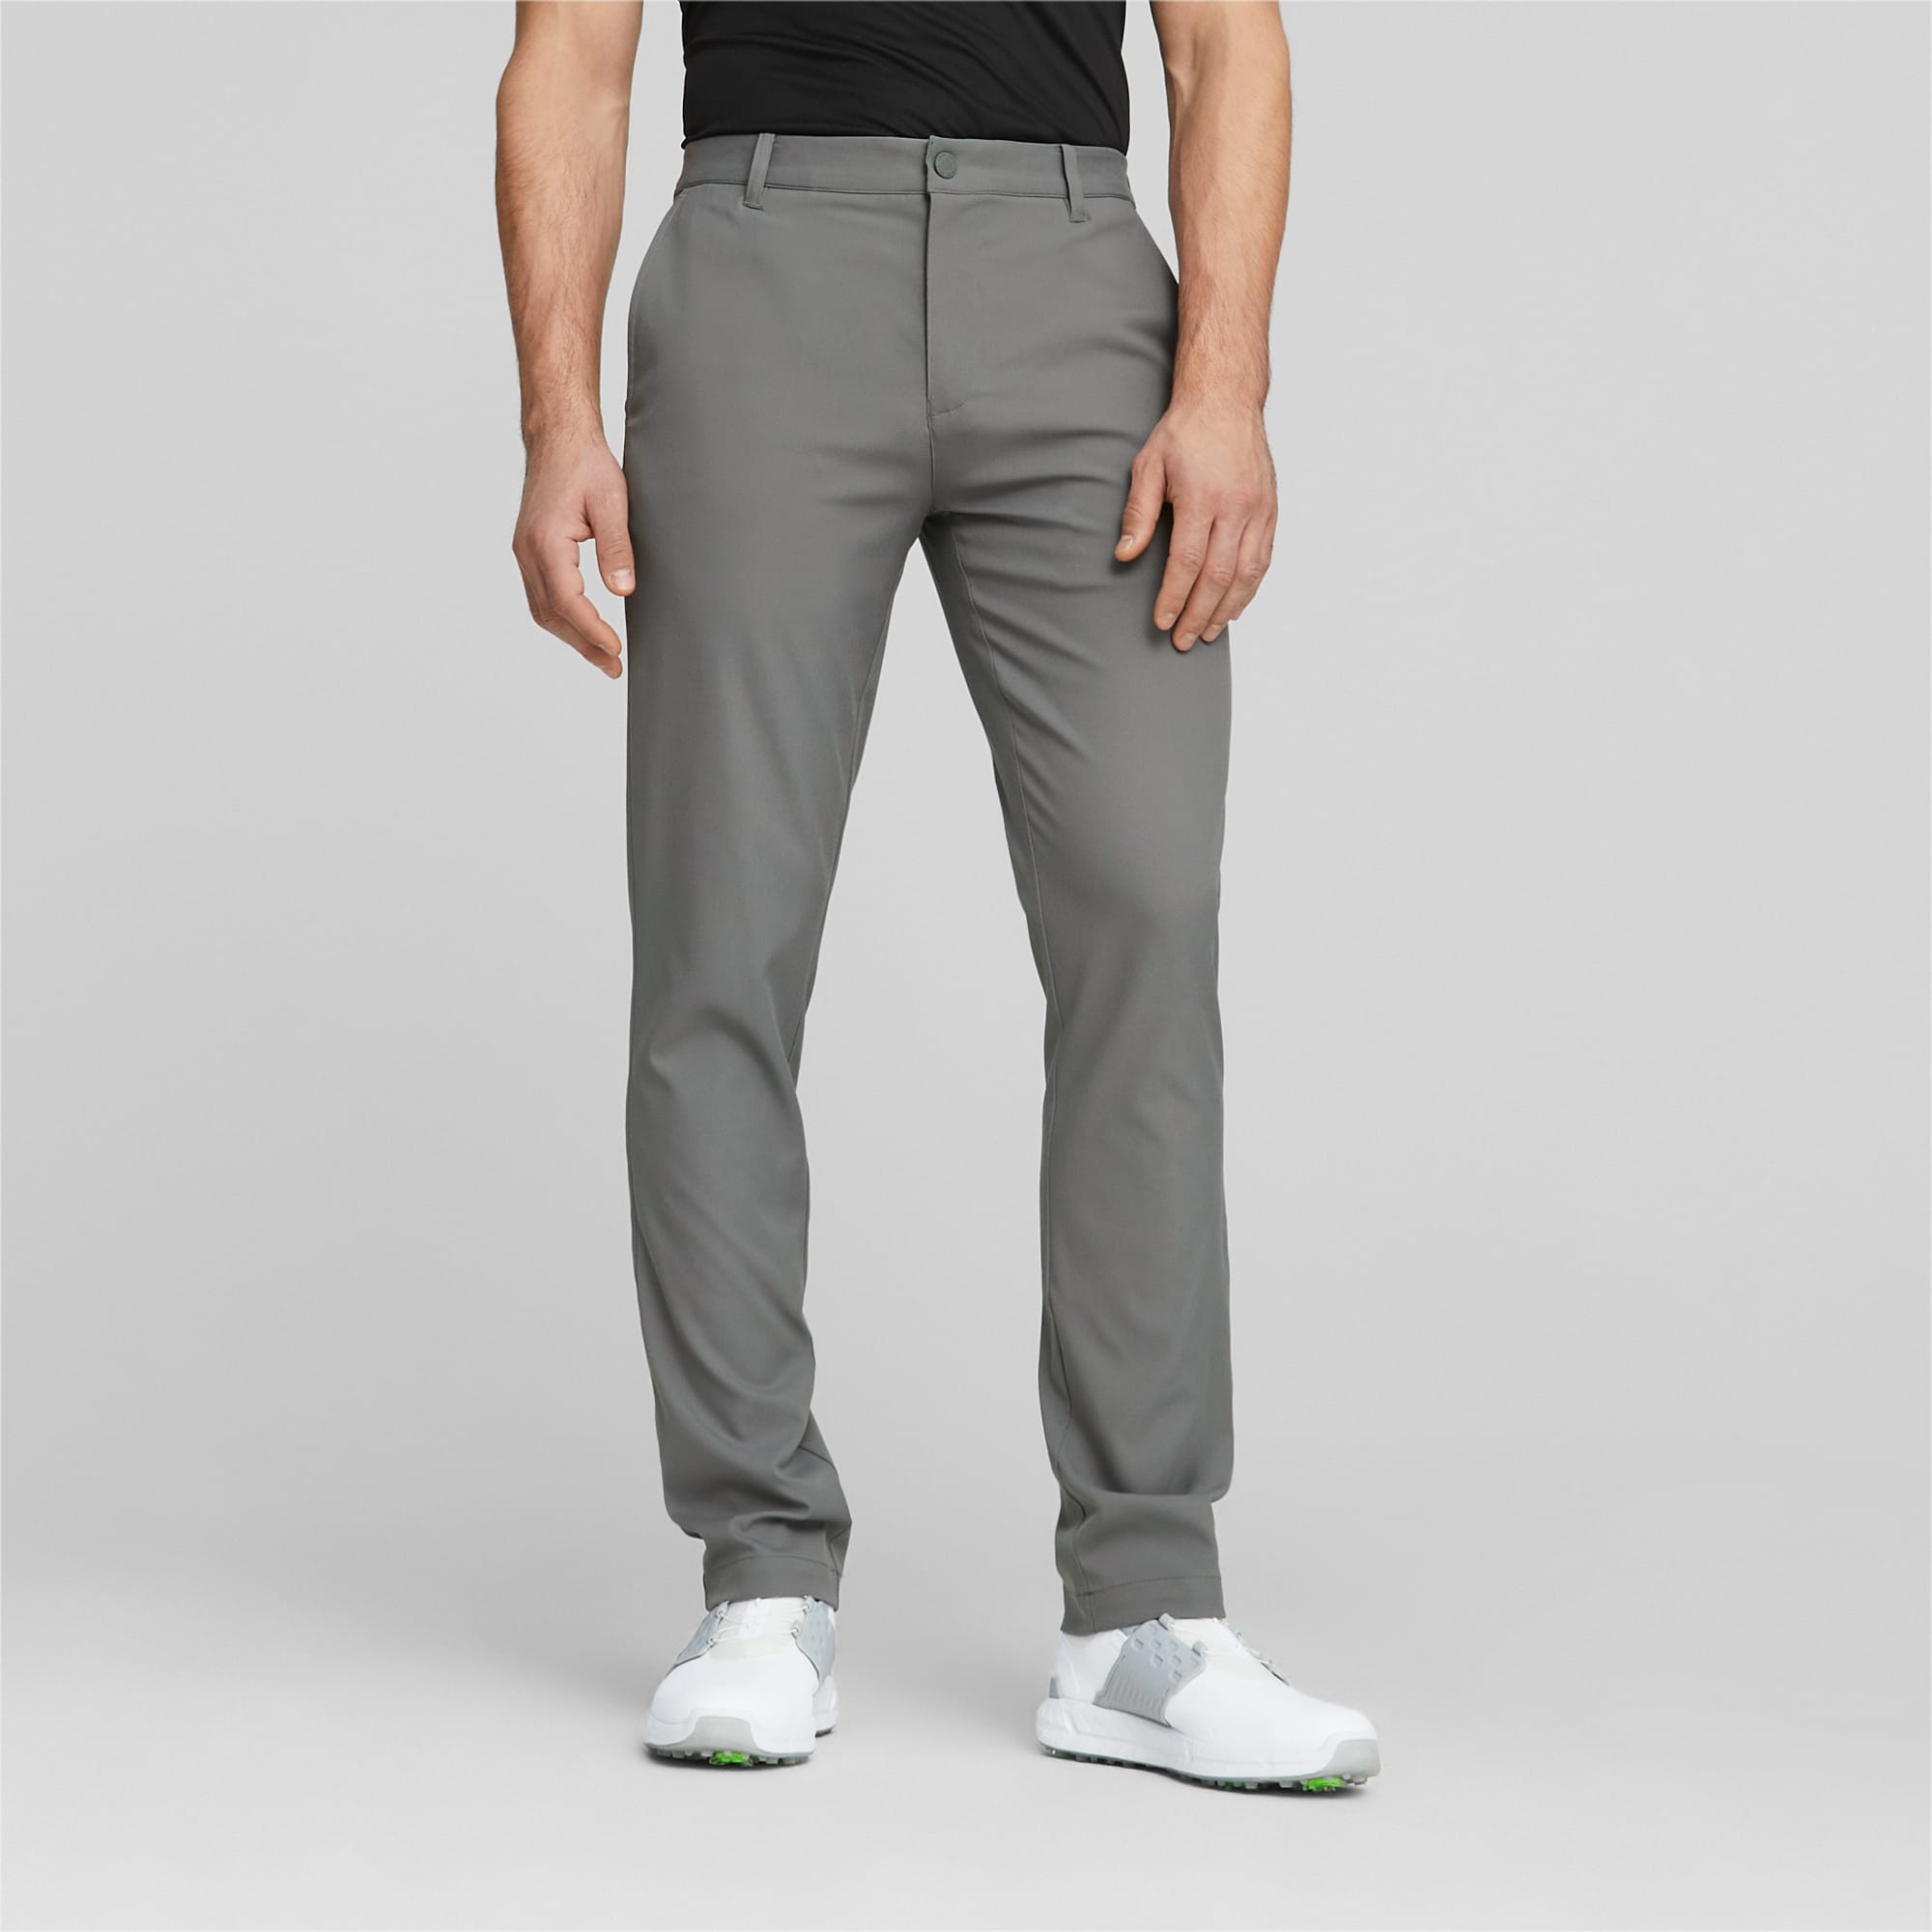 PUMA Dealer Tailored Golf Pants Men, Slate Sky, Size 36/34, Clothing